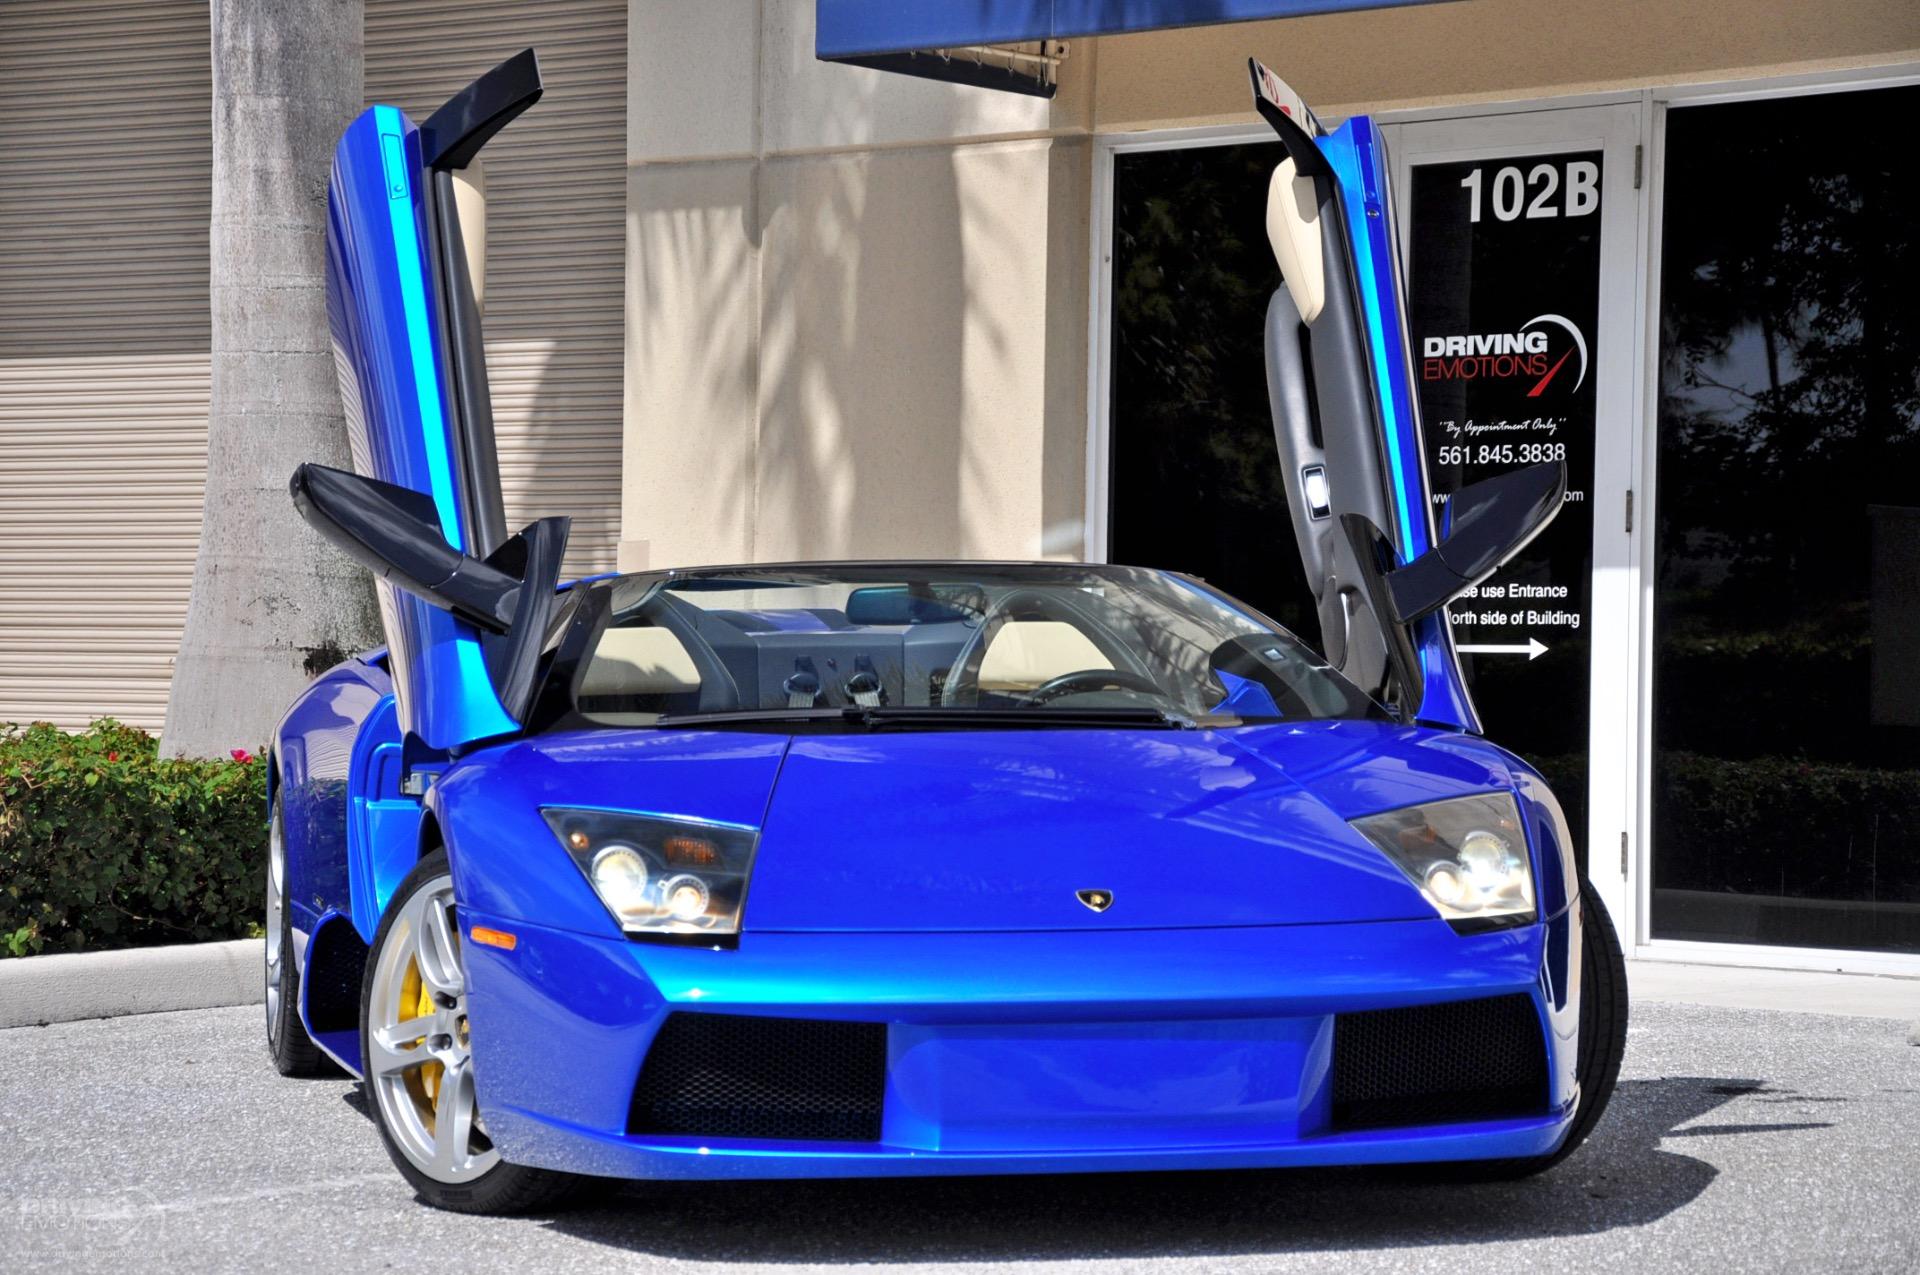 2006 Lamborghini Murcielago Base Convertible 2-Door | eBay